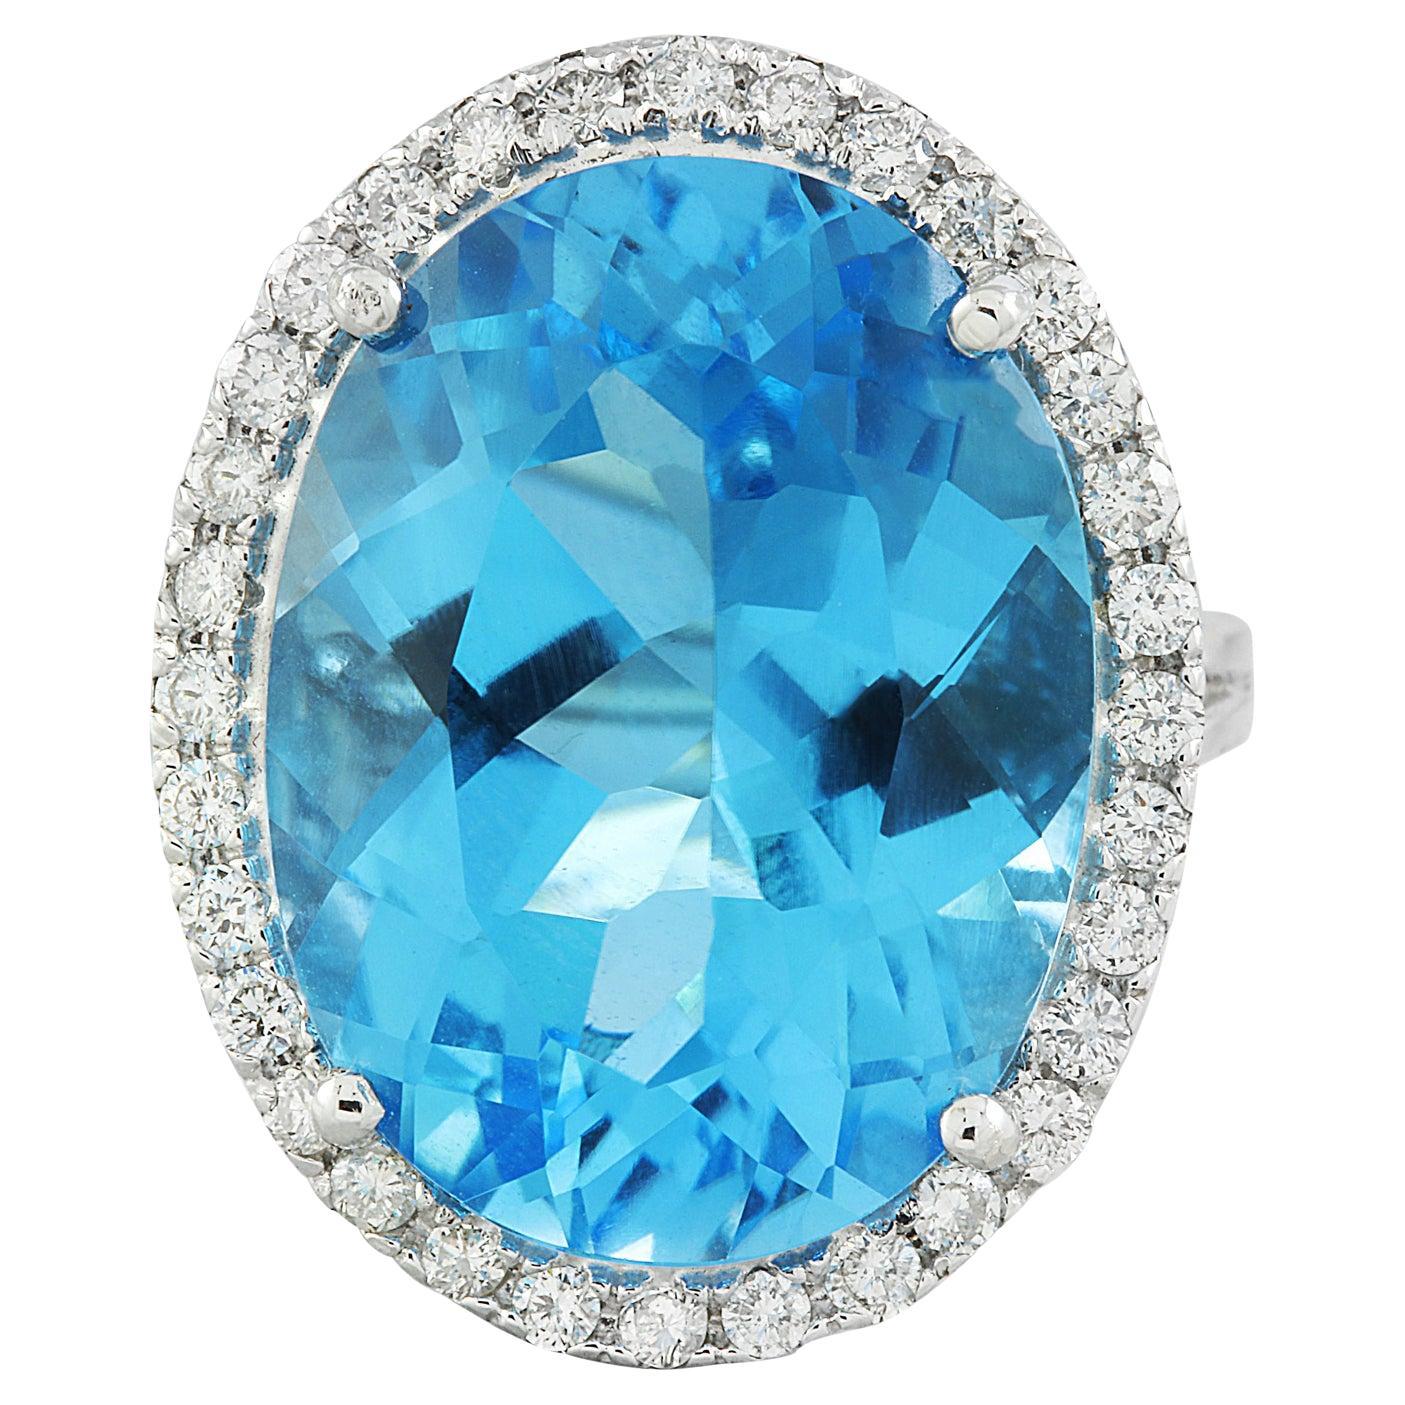 Radiant Blue Sparkle: Swiss Blue Topaz Diamond Ring in 14K Solid White Gold